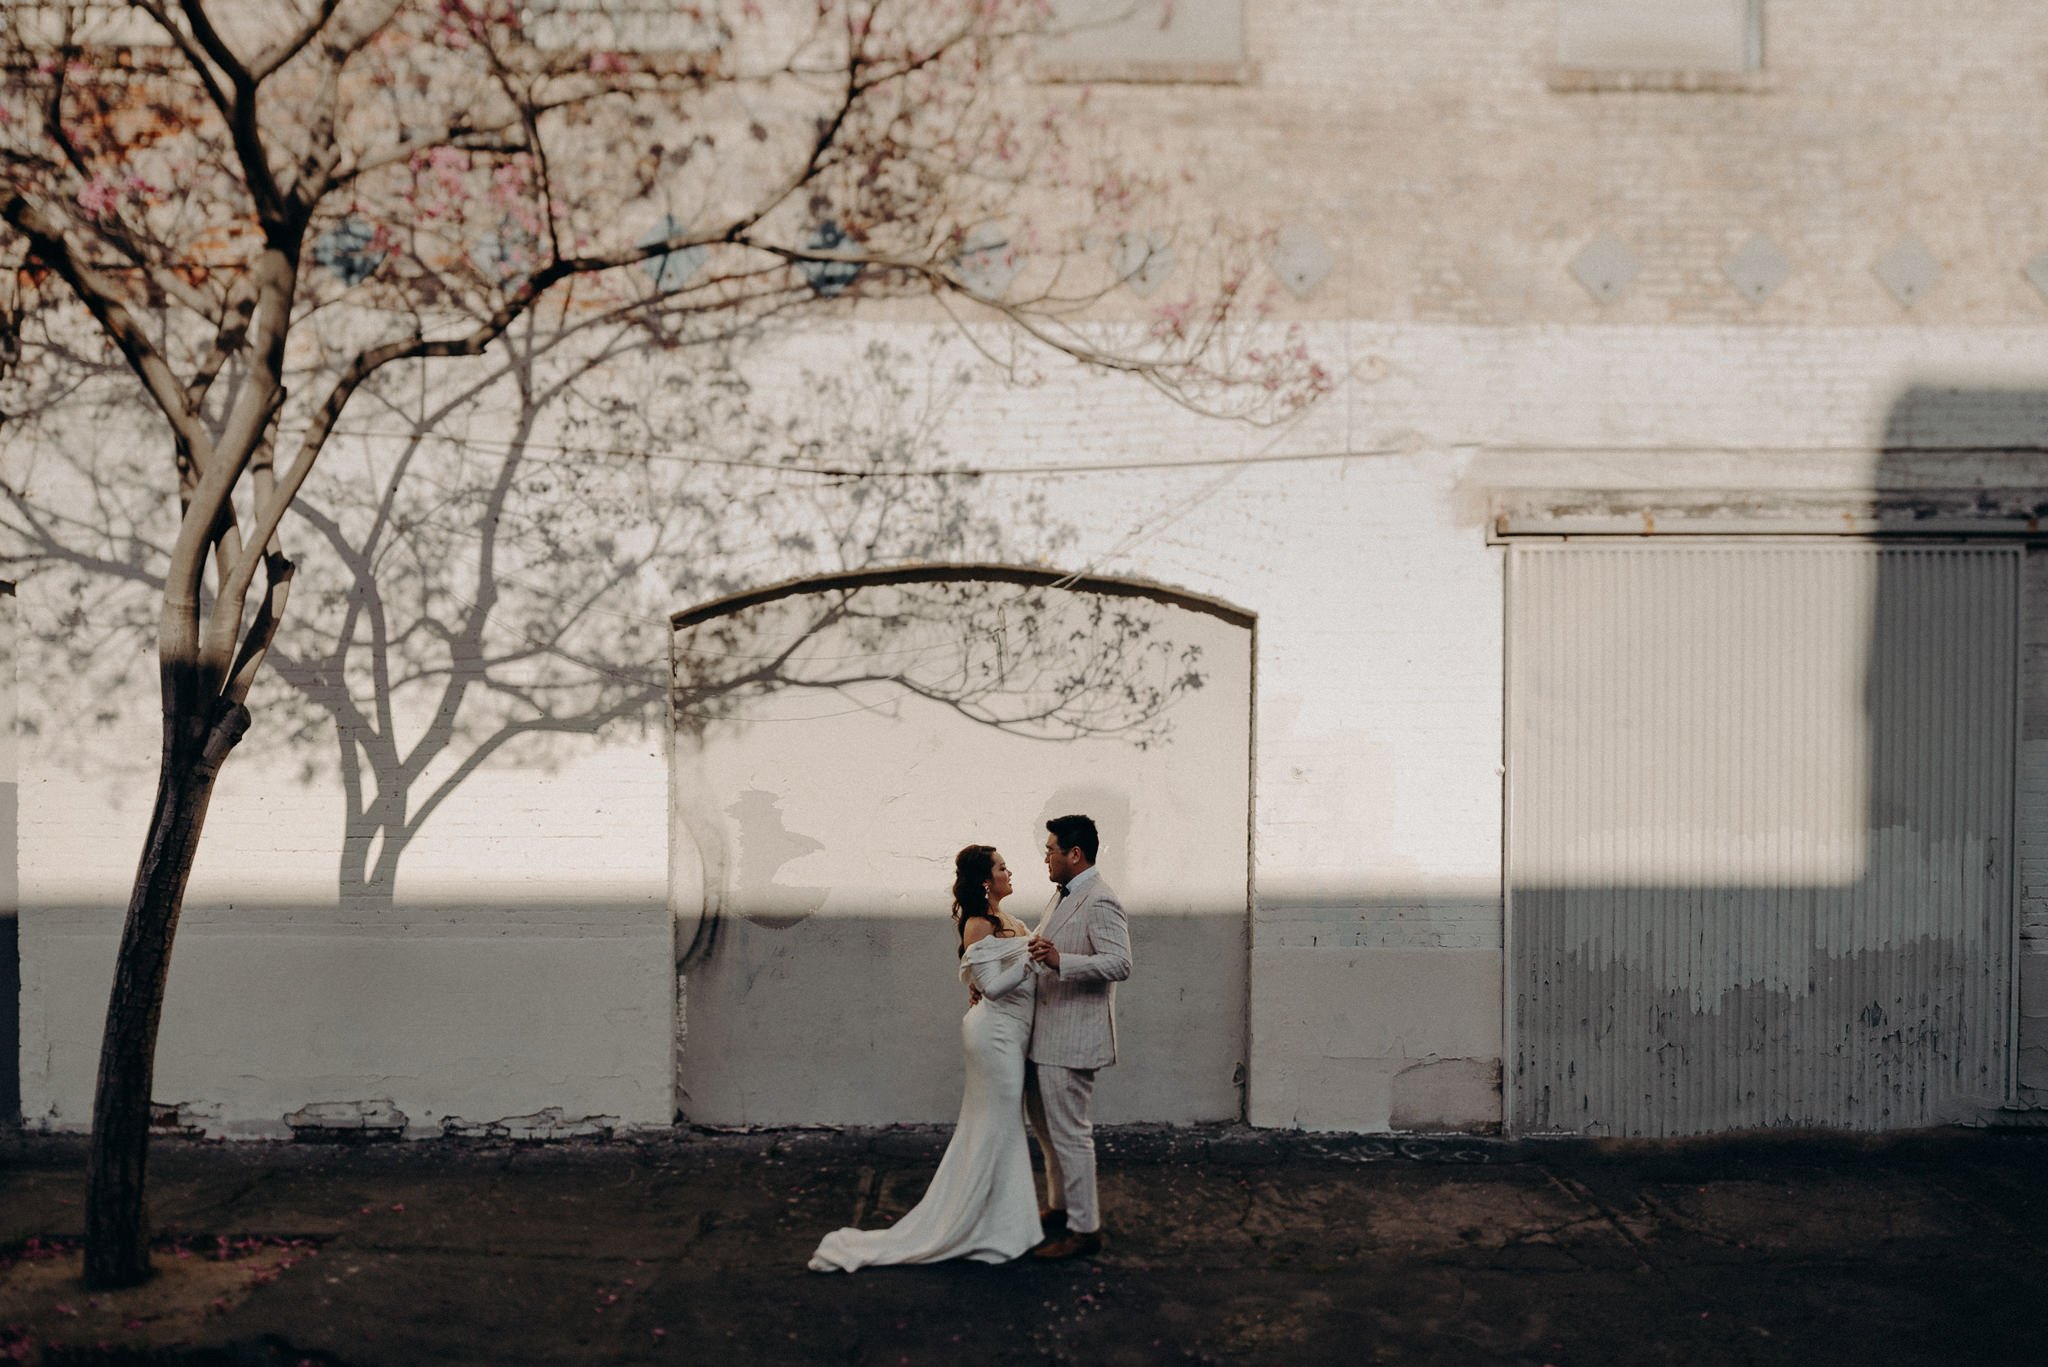 lgbtqia+ wedding photographers in los angeles - city elopement - itlaphoto.com-30.jpg